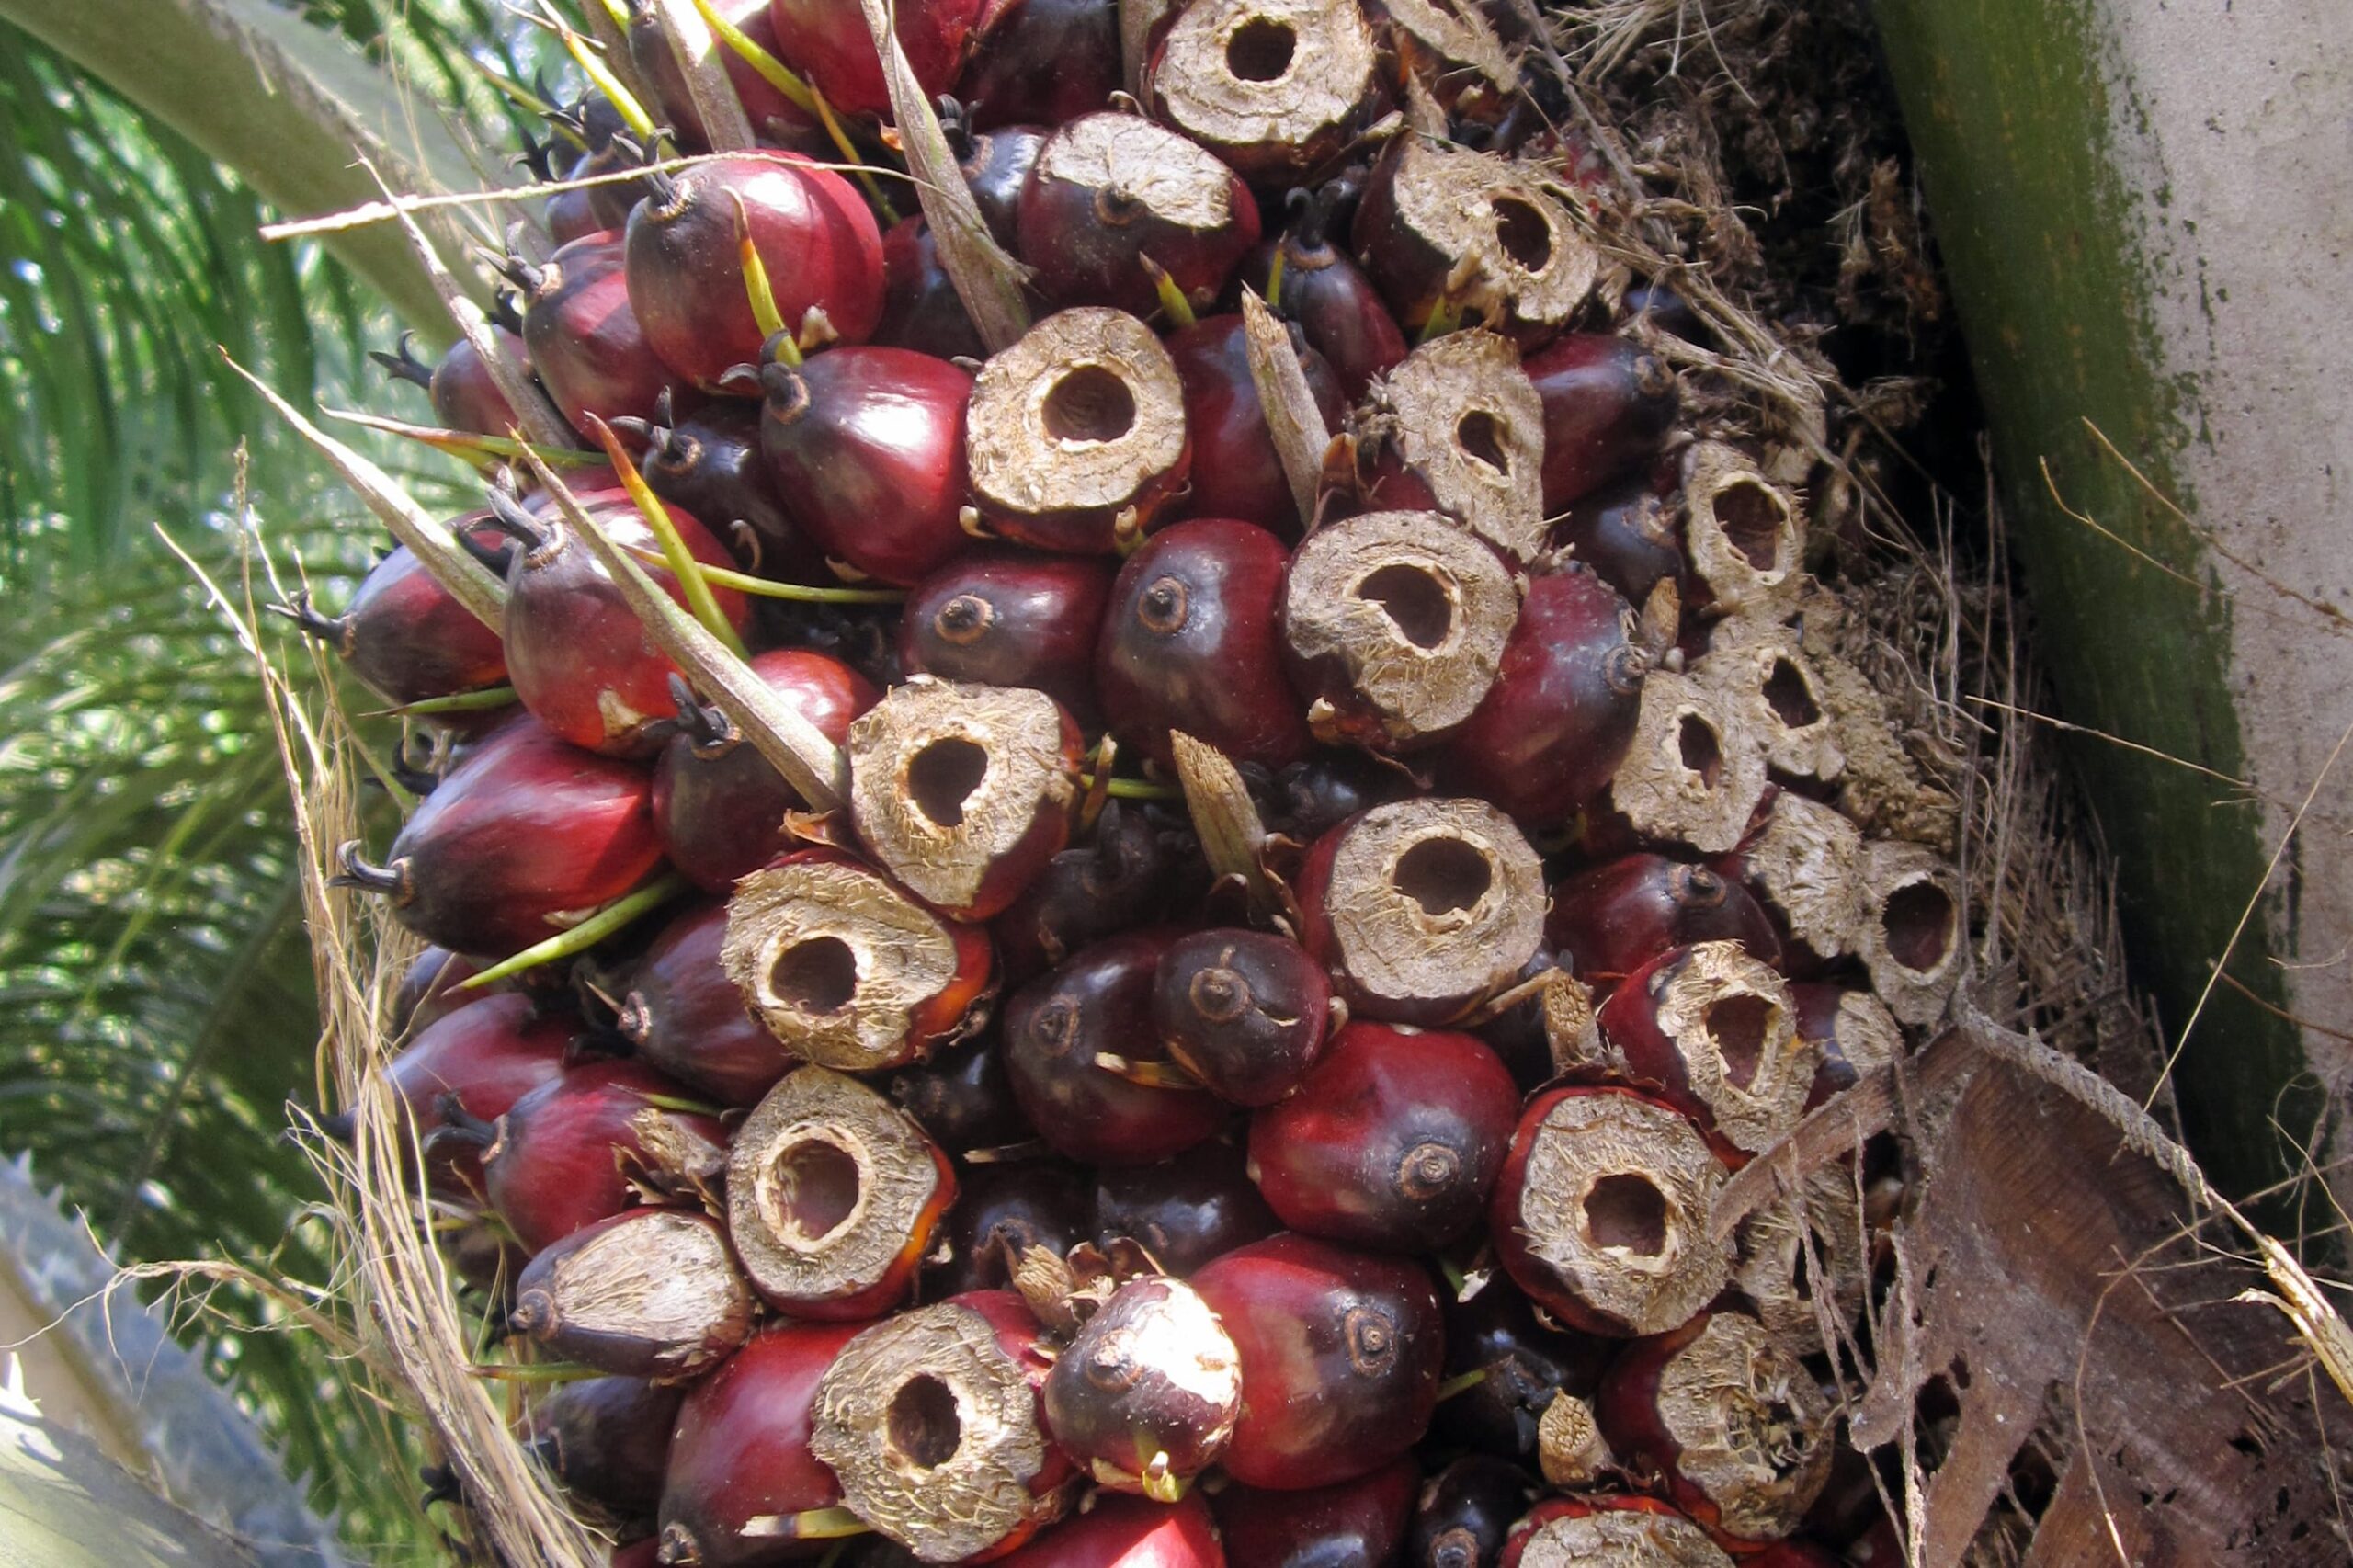 Rat damage to oil palm fresh fruit bunch